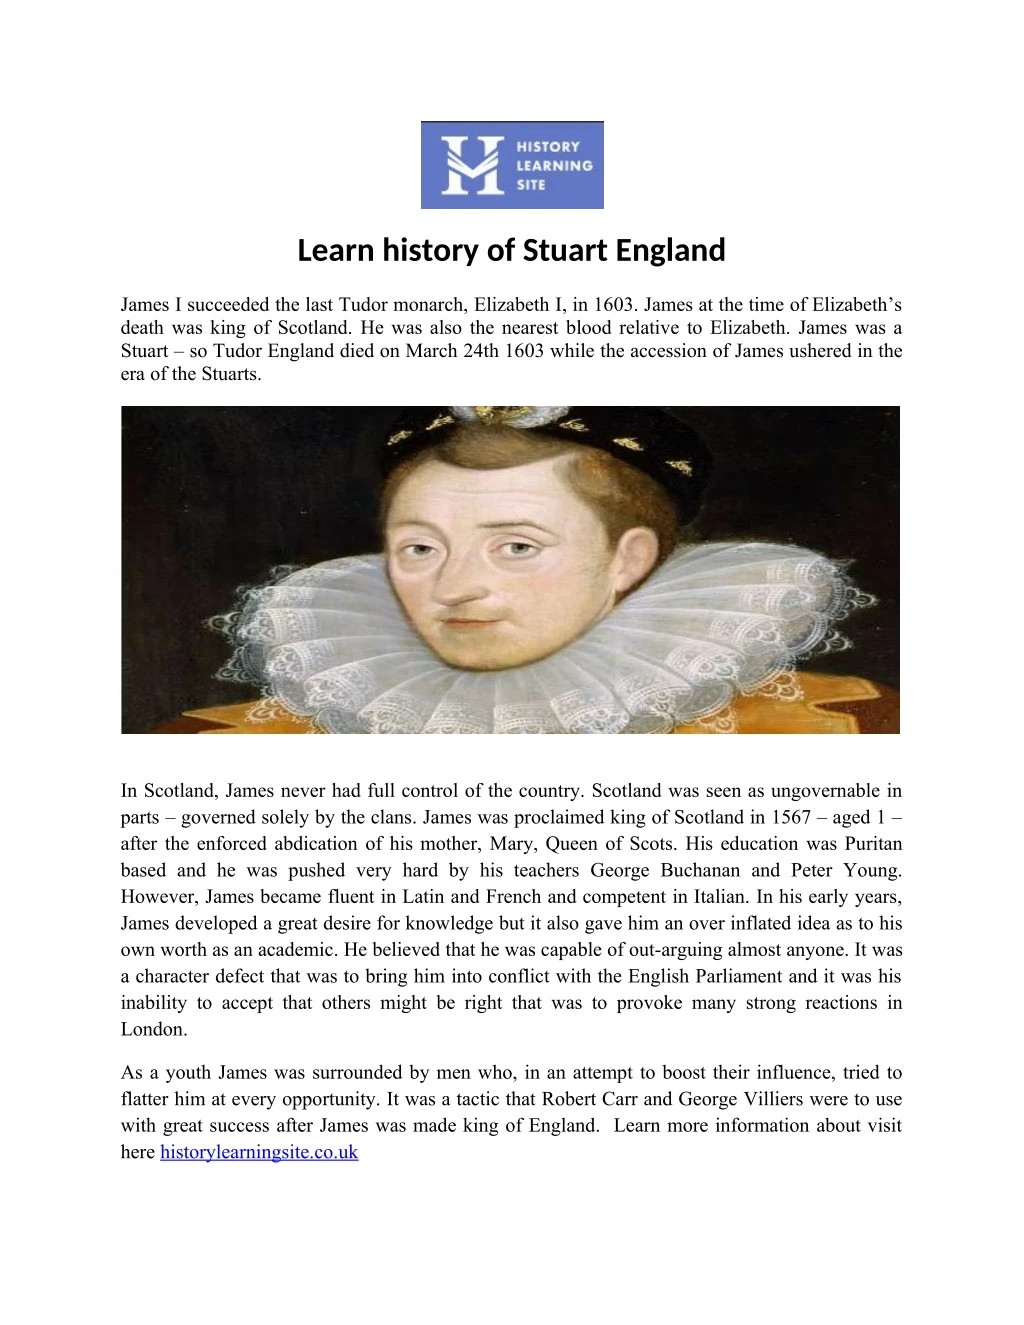 learn history of stuart england